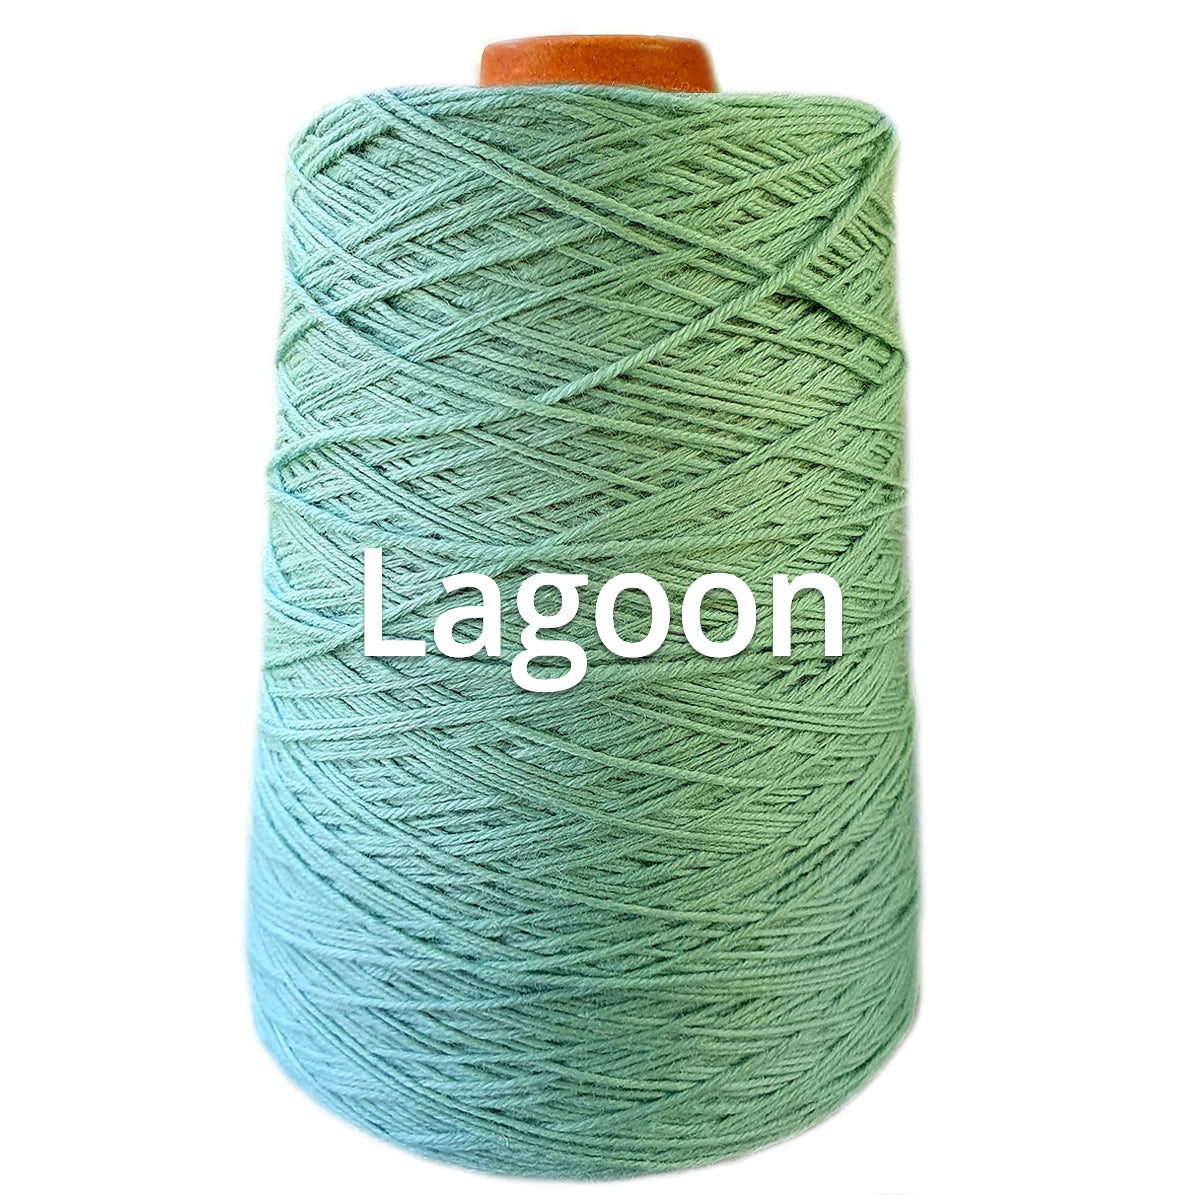 Lagoon - Nundle Collection 12 ply Chaffey Yarn 400g Cone